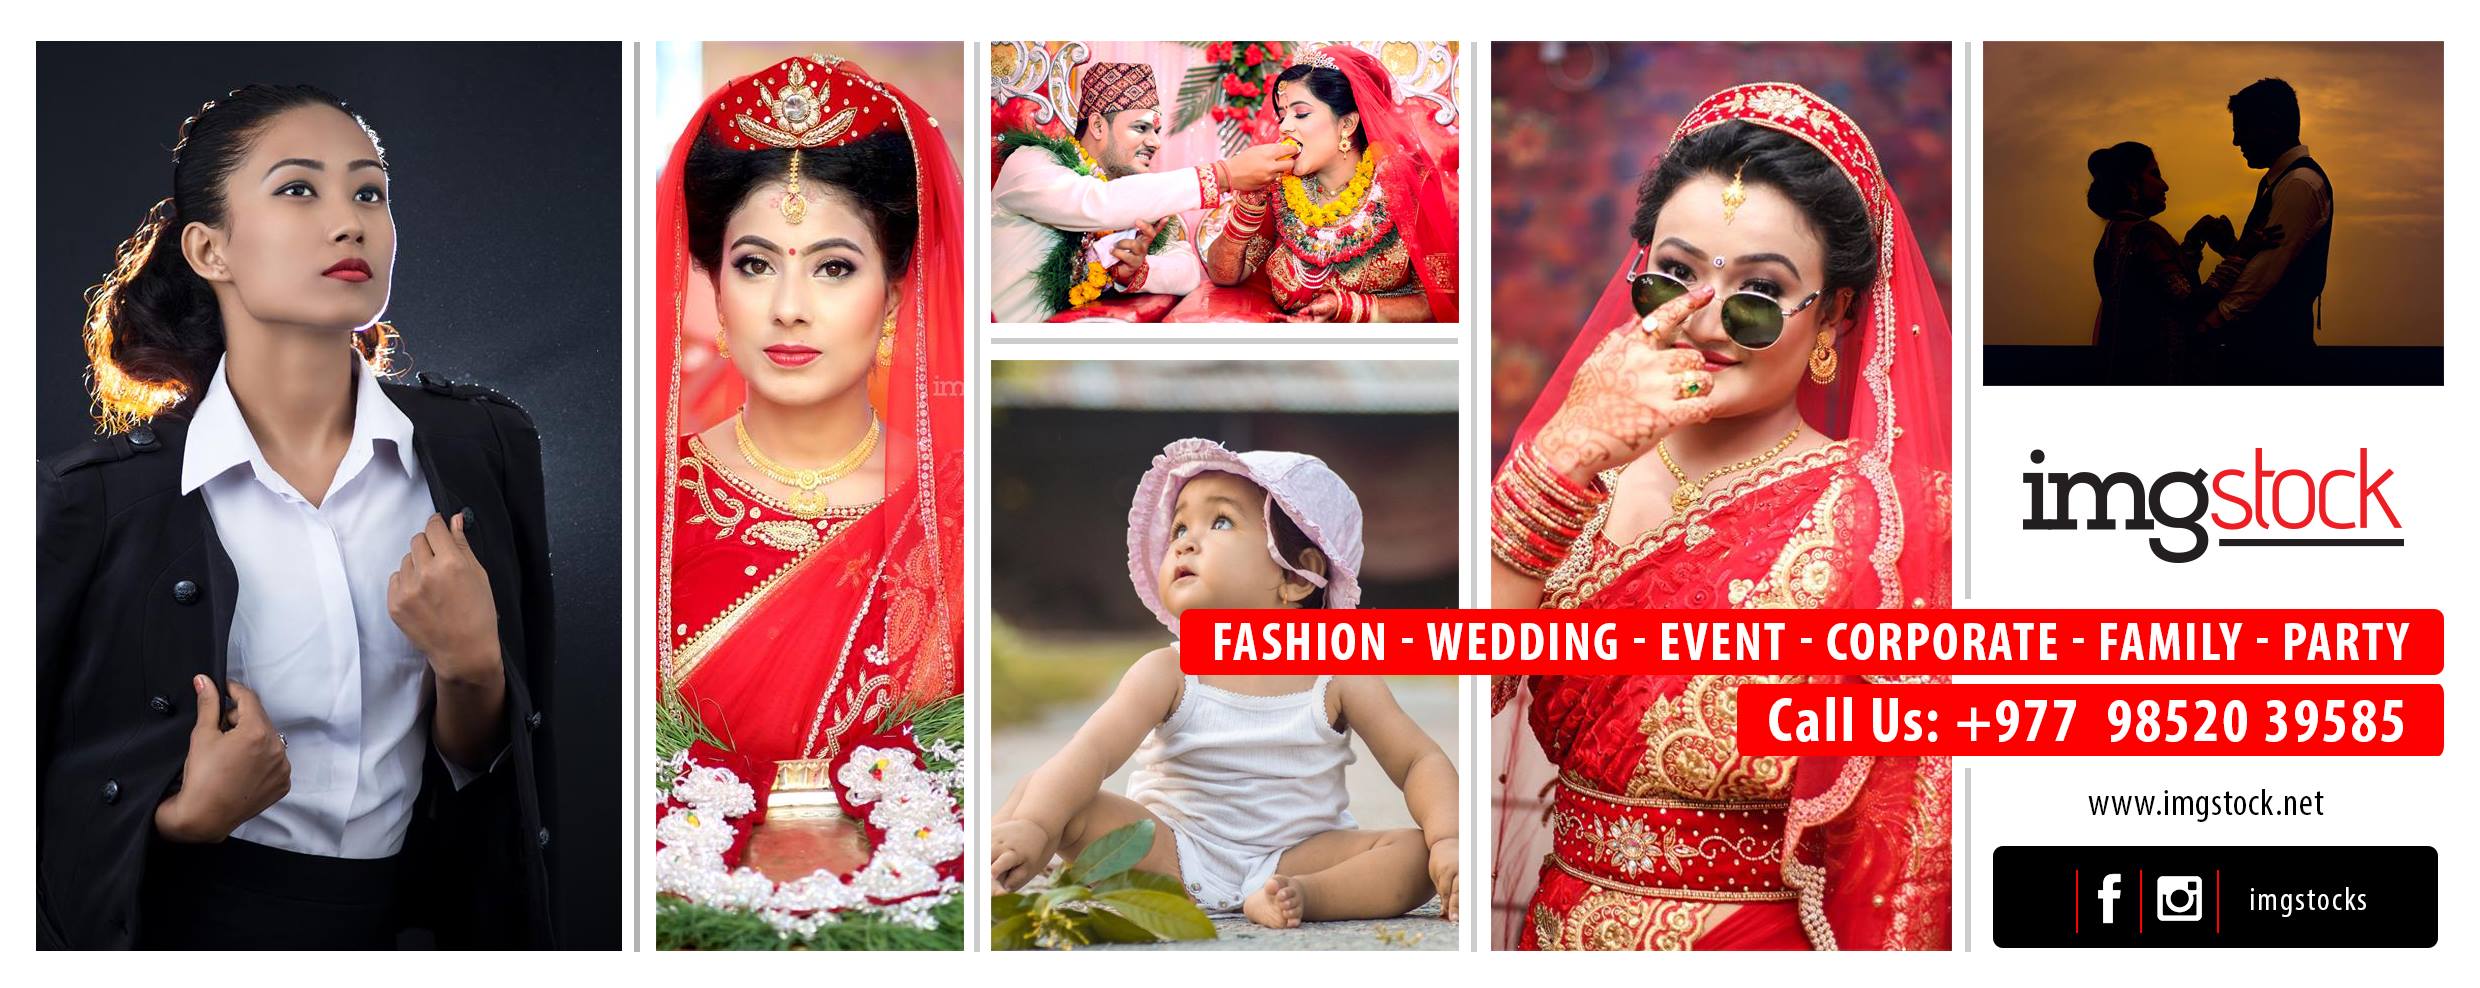 wedding photography biratnagar photos imgstock